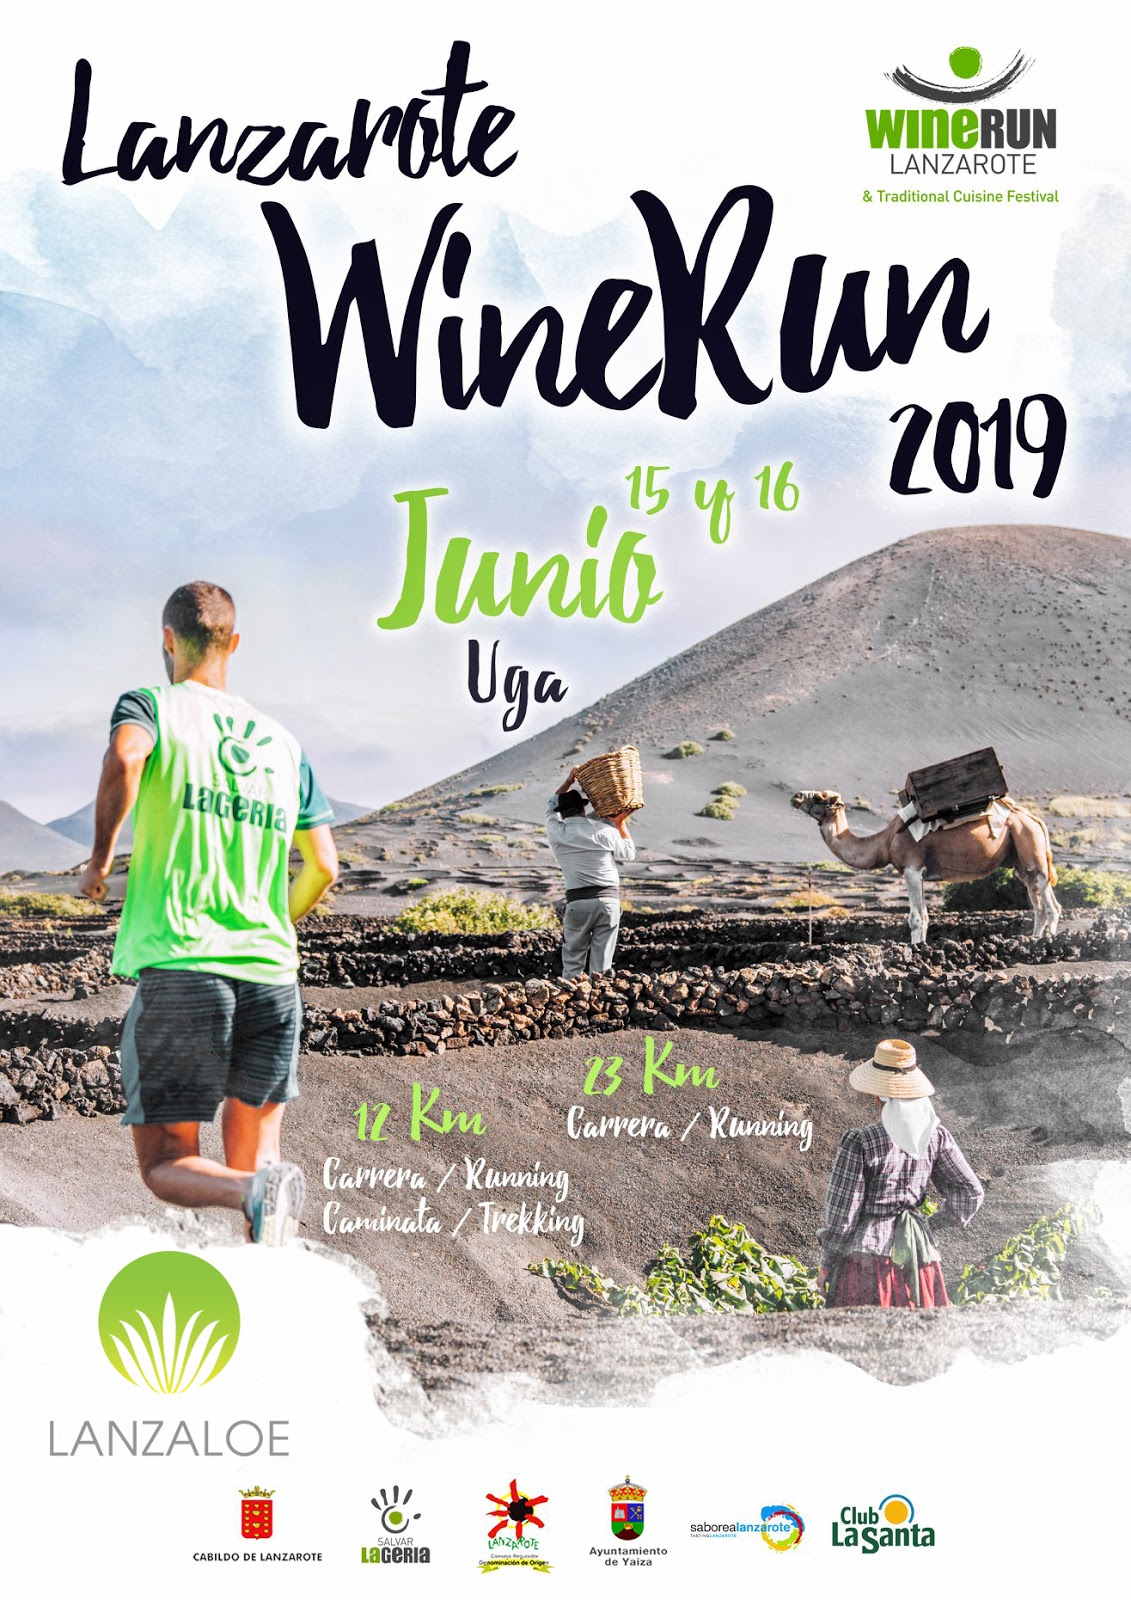 One more year, Lanzaloe is sponsor of the Wine Run Lanzarote 2019!